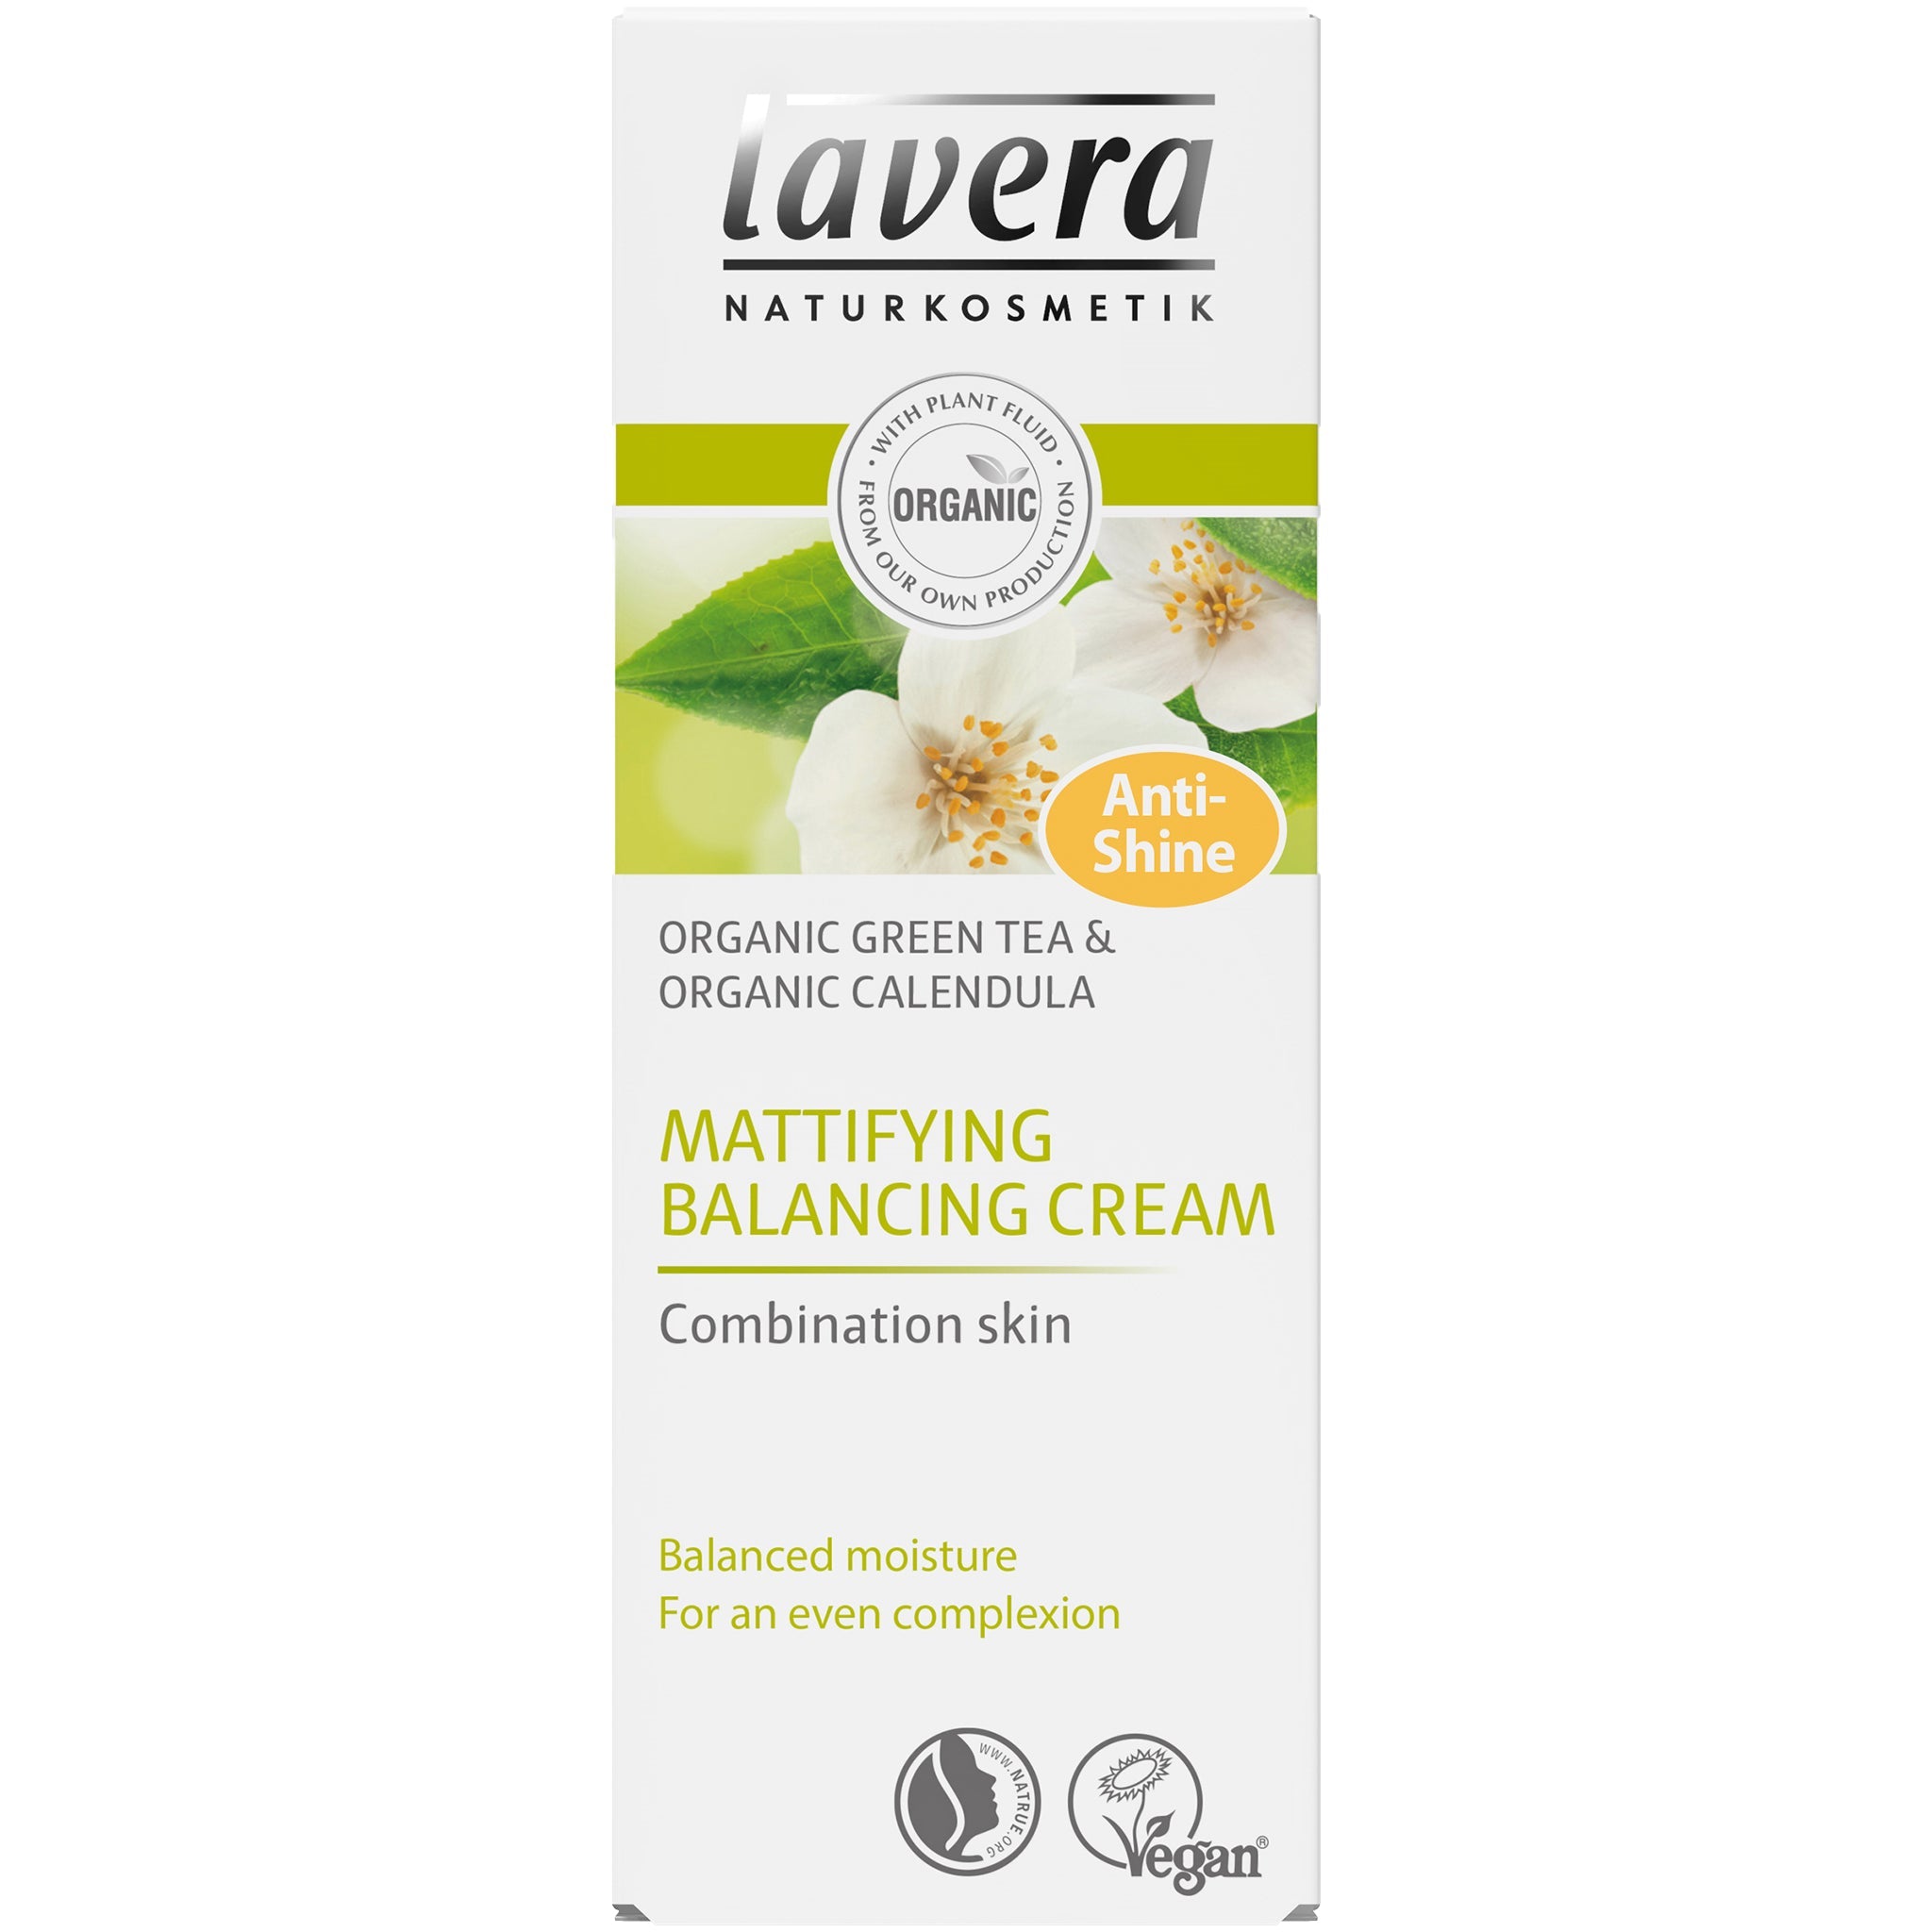 Mattifying Balancing Cream - Organic Green Tea and Organic Calendula - mypure.co.uk